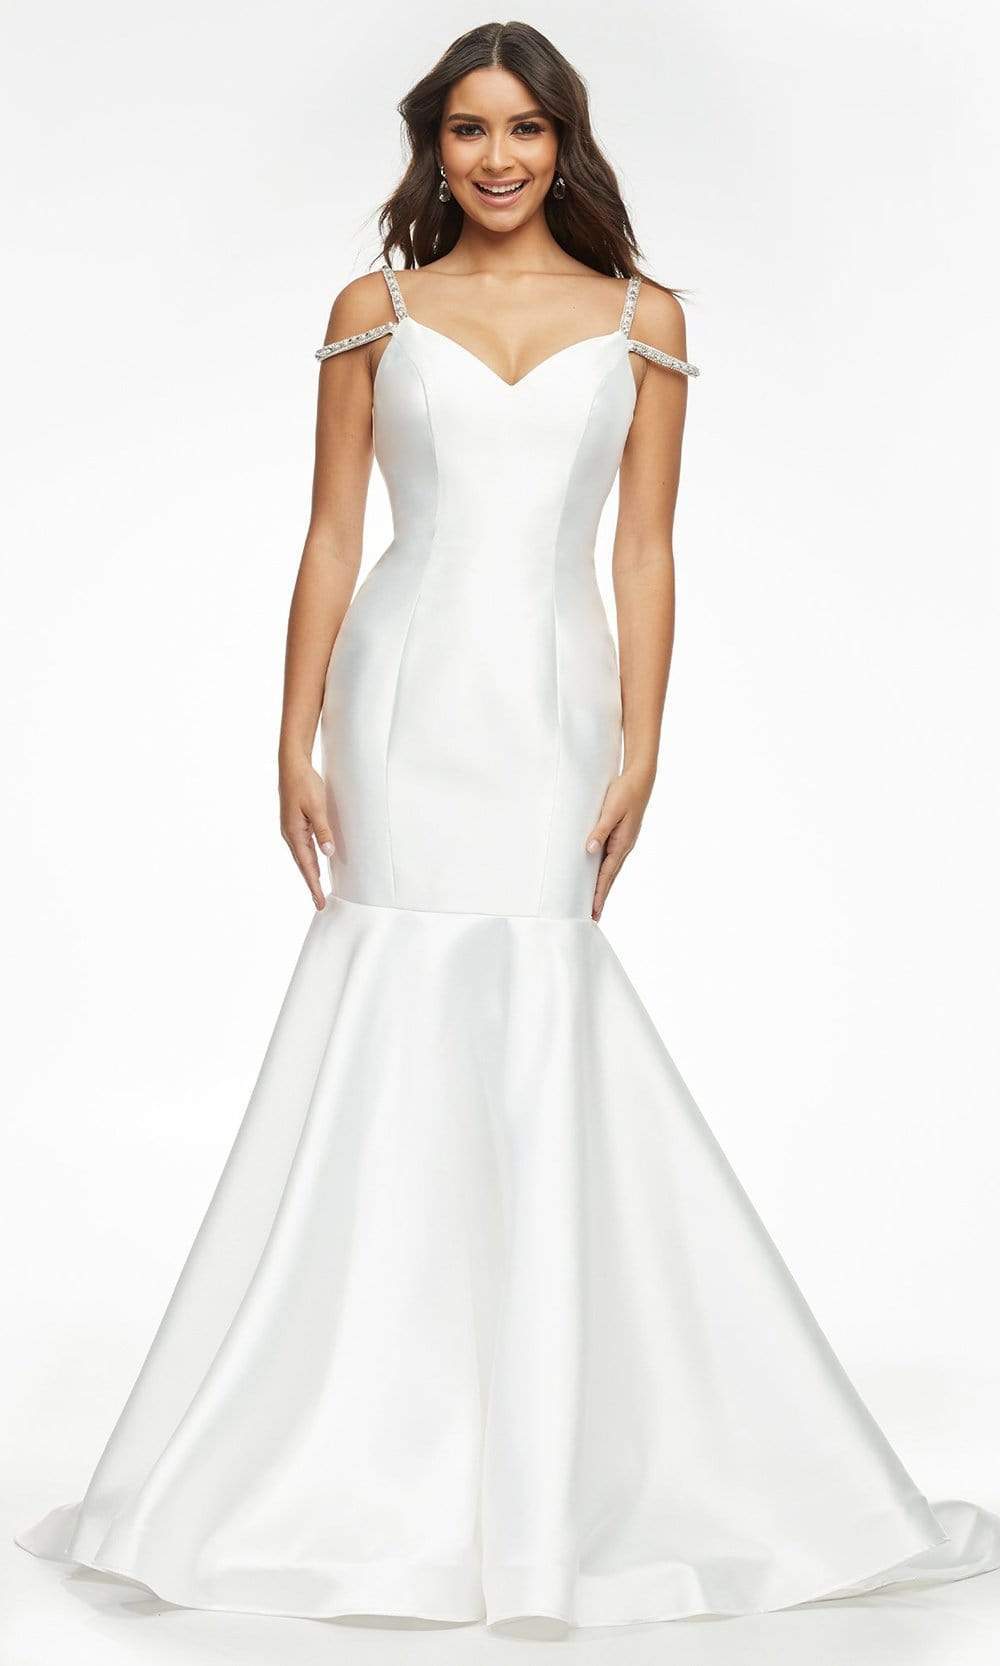 Ashley Lauren - 11103 Cold Shoulder Mermaid Satin Gown Wedding Dresses 0 / Ivory